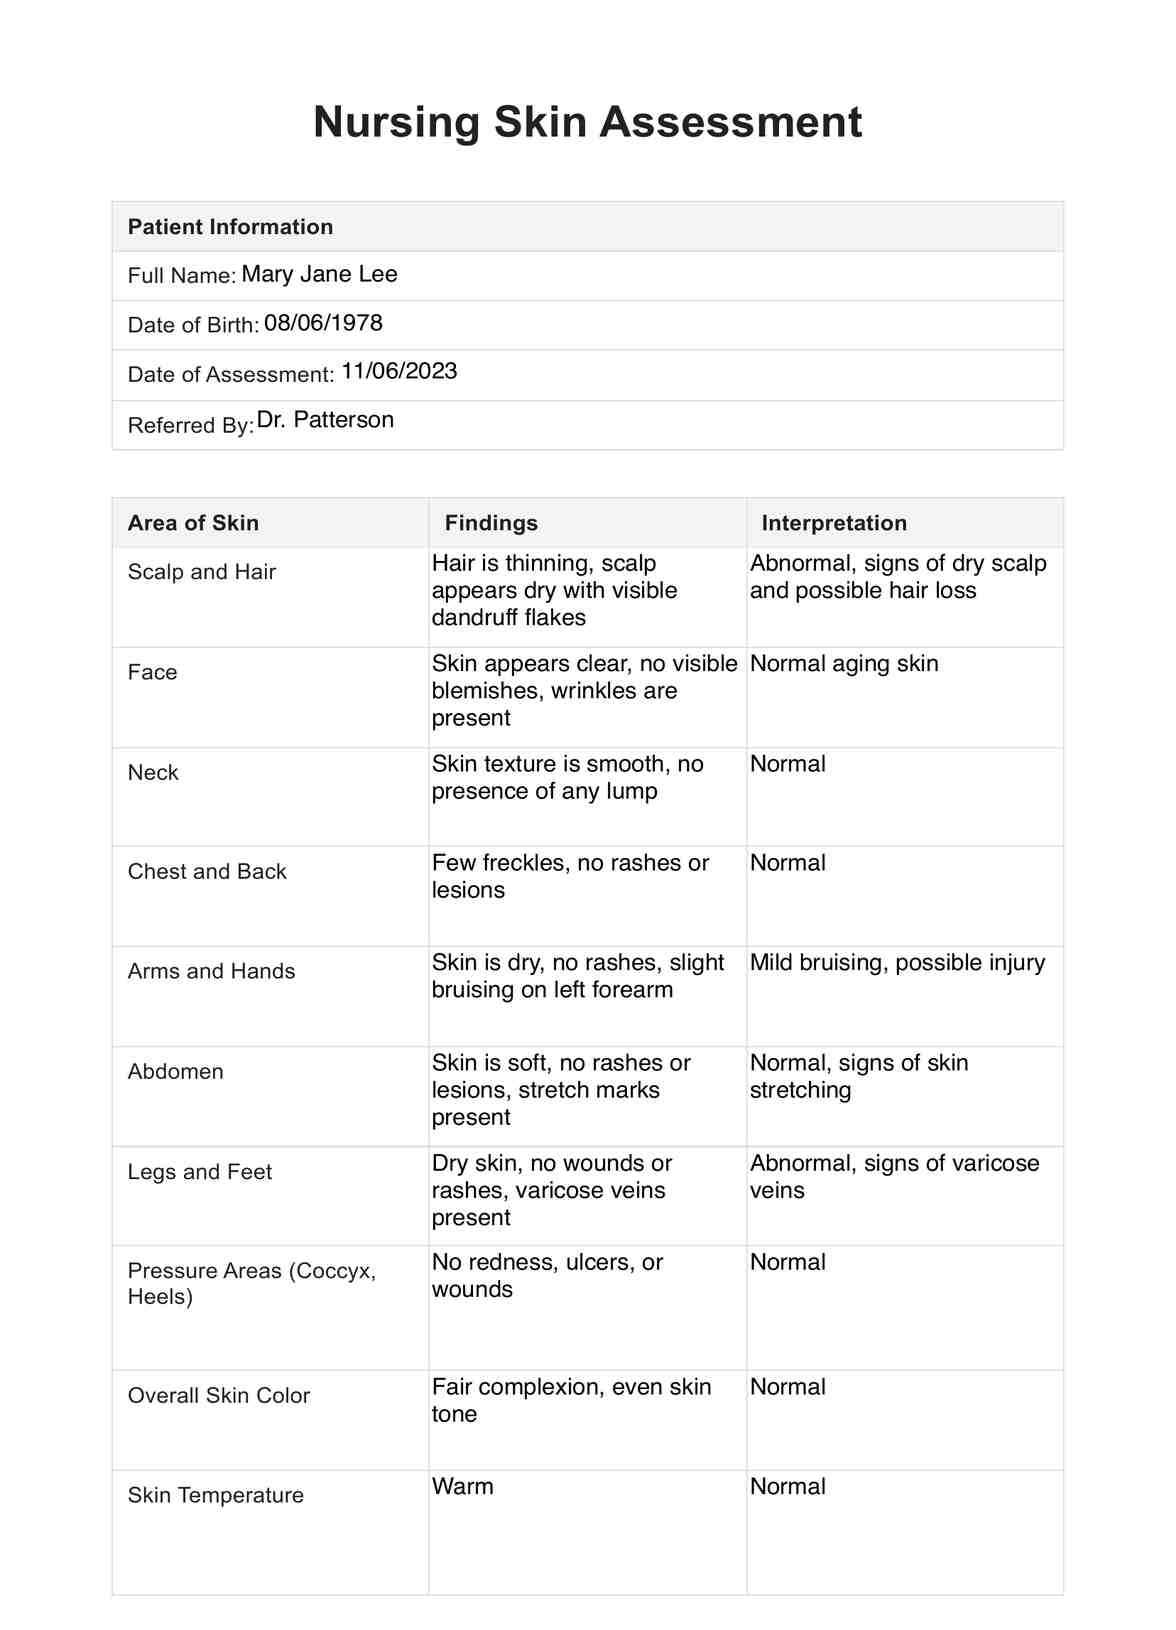 Nursing Skin Assessment PDF Example